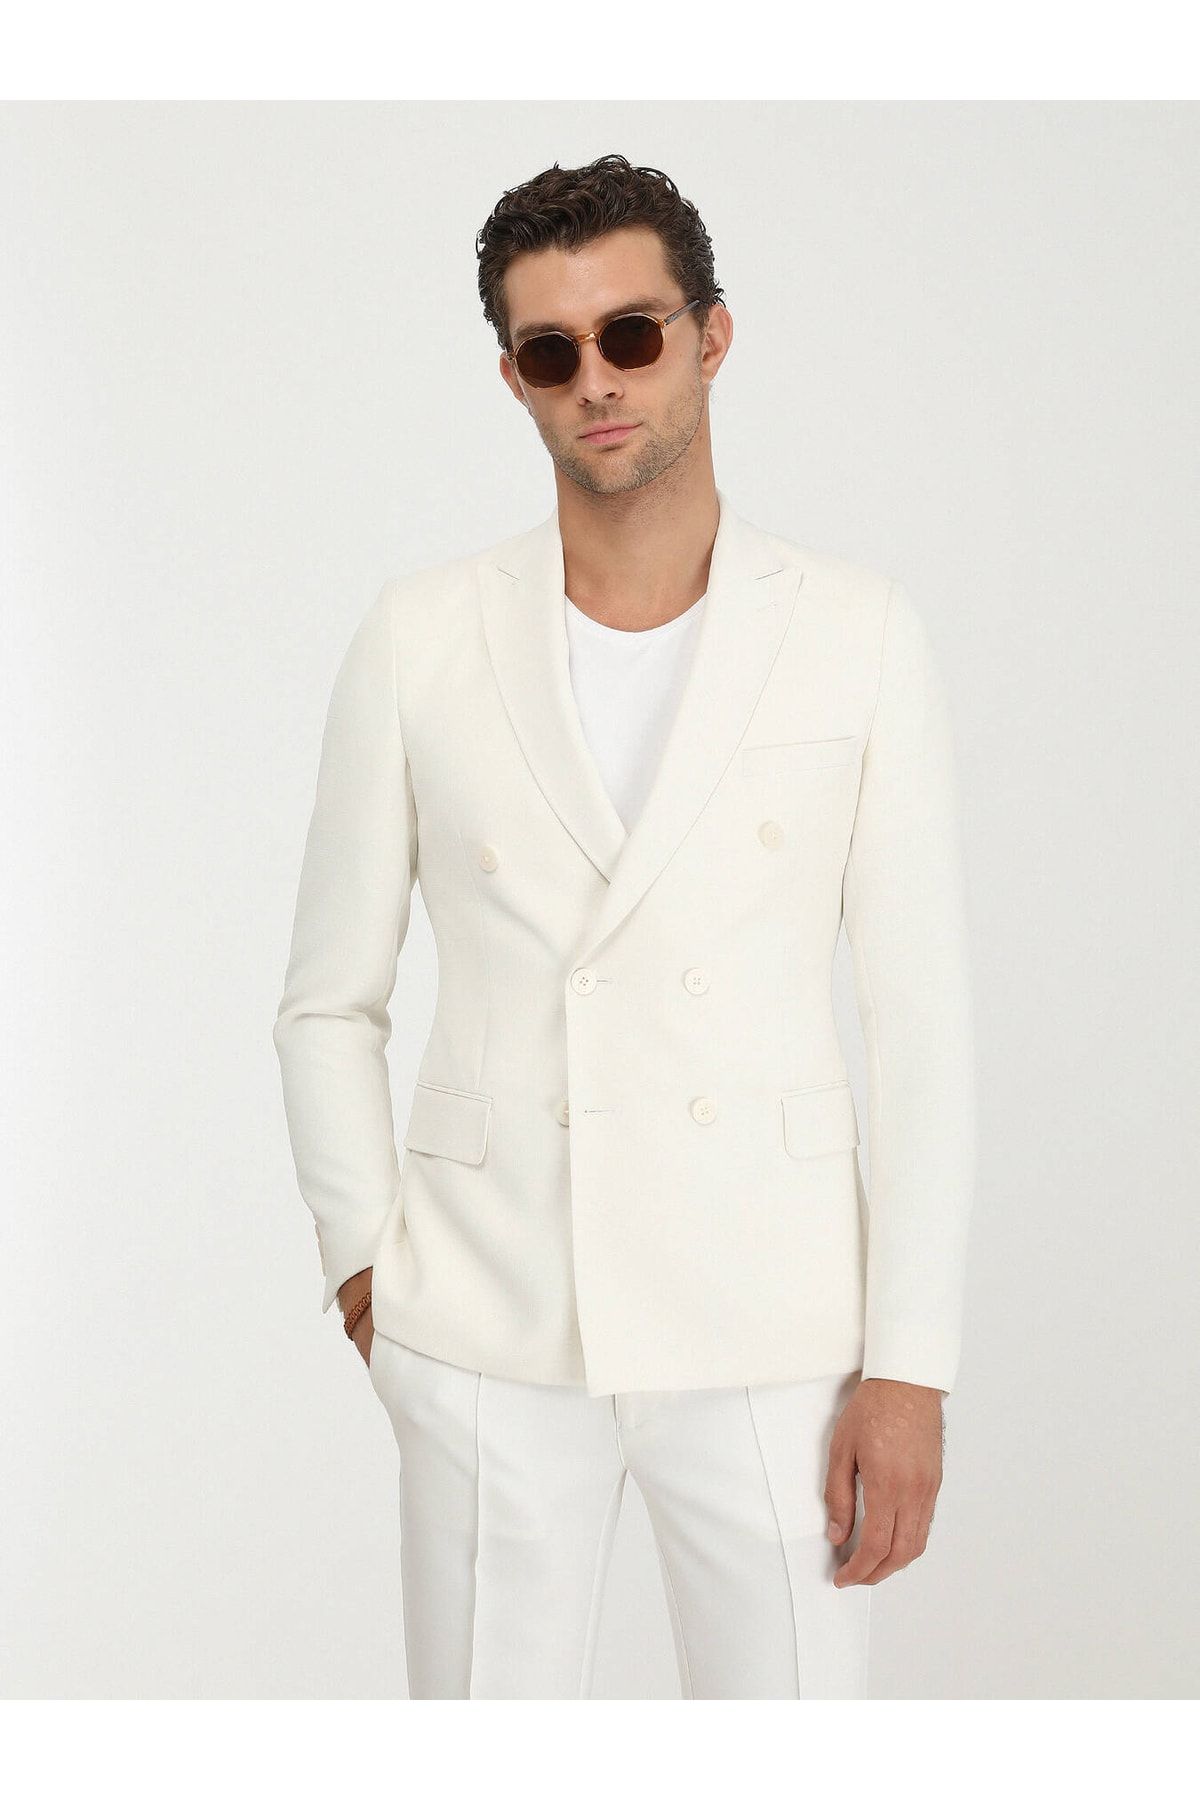 Kip Beyaz Düz Slim Fit Ceket